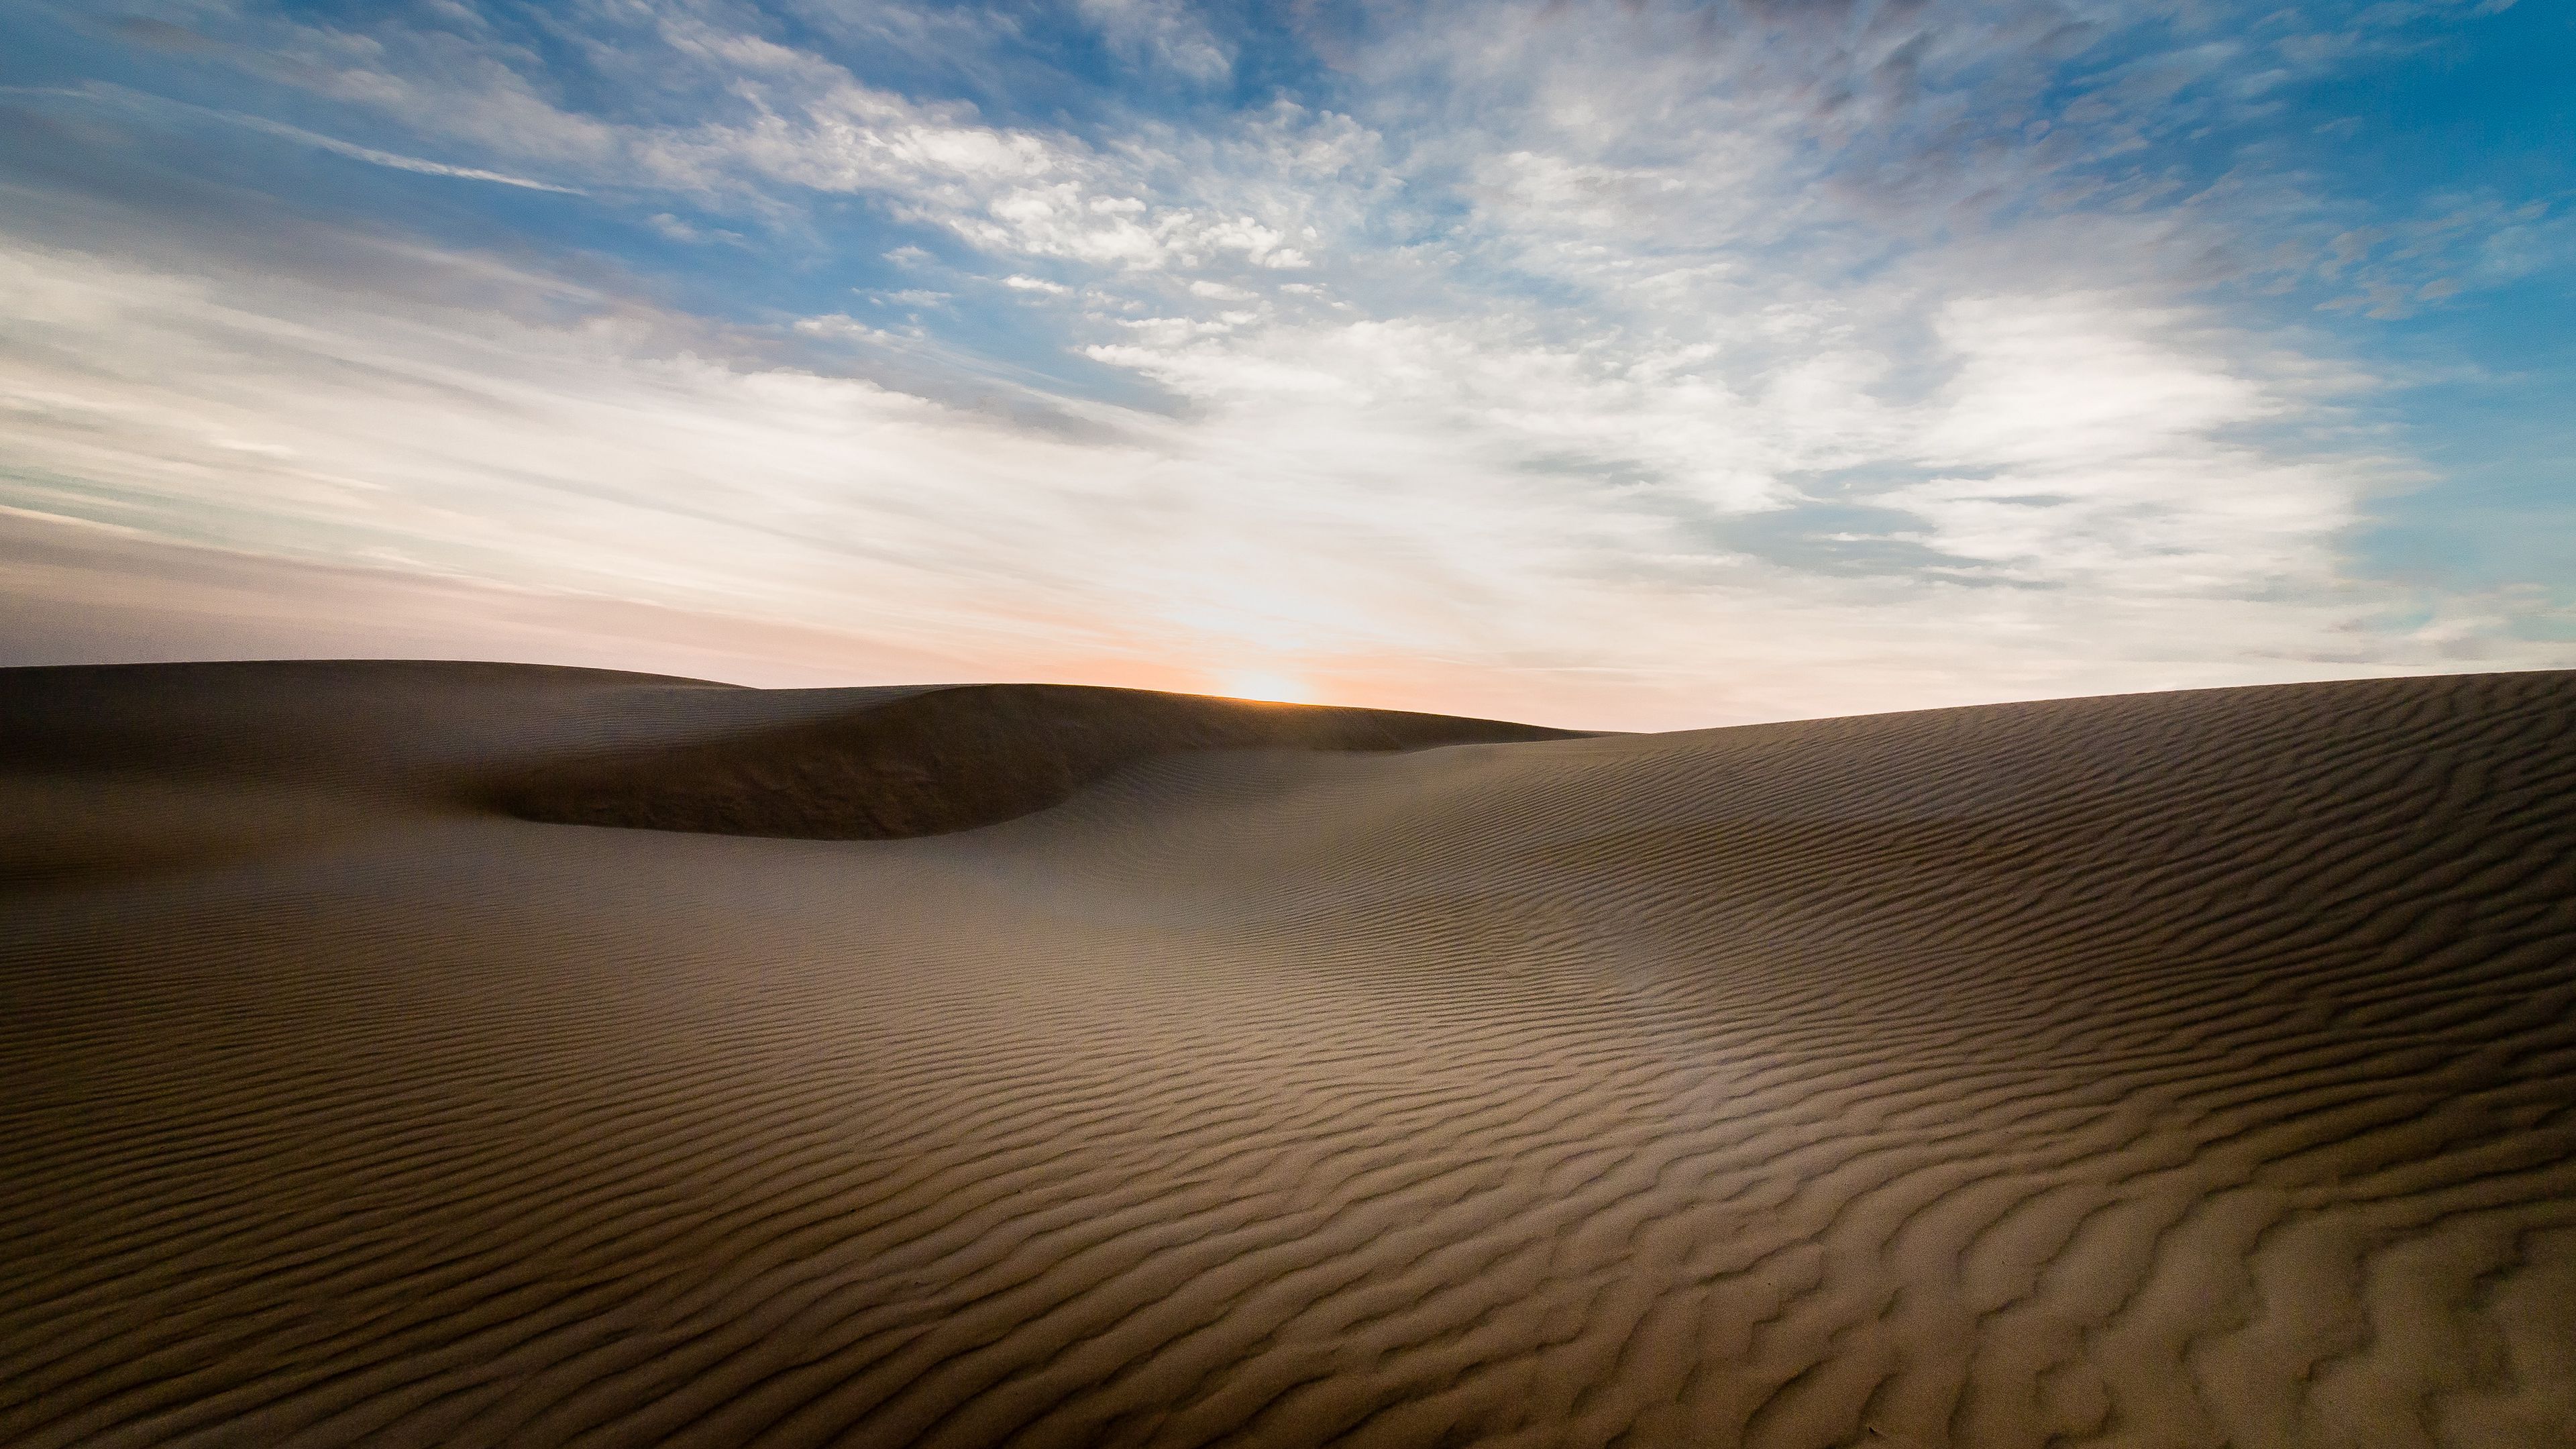 Download Wallpaper 3840x2160 Desert Sand Dunes Waves Twilight Landscape 4k Uhd 169 Hd